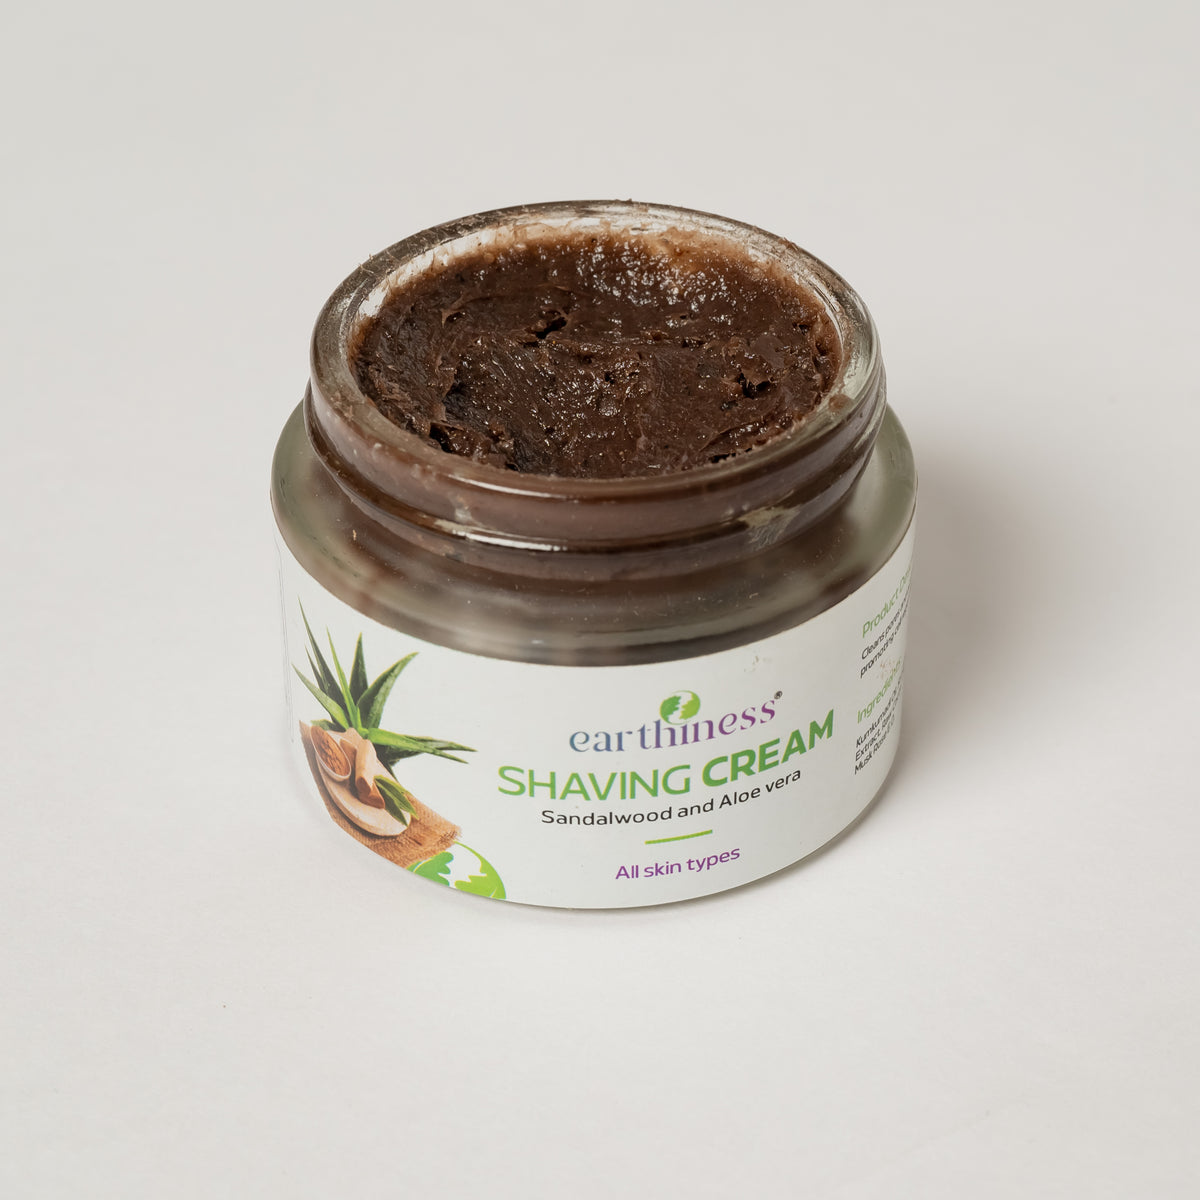 Organic Shaving Cream with Sandalwood and Aloe vera